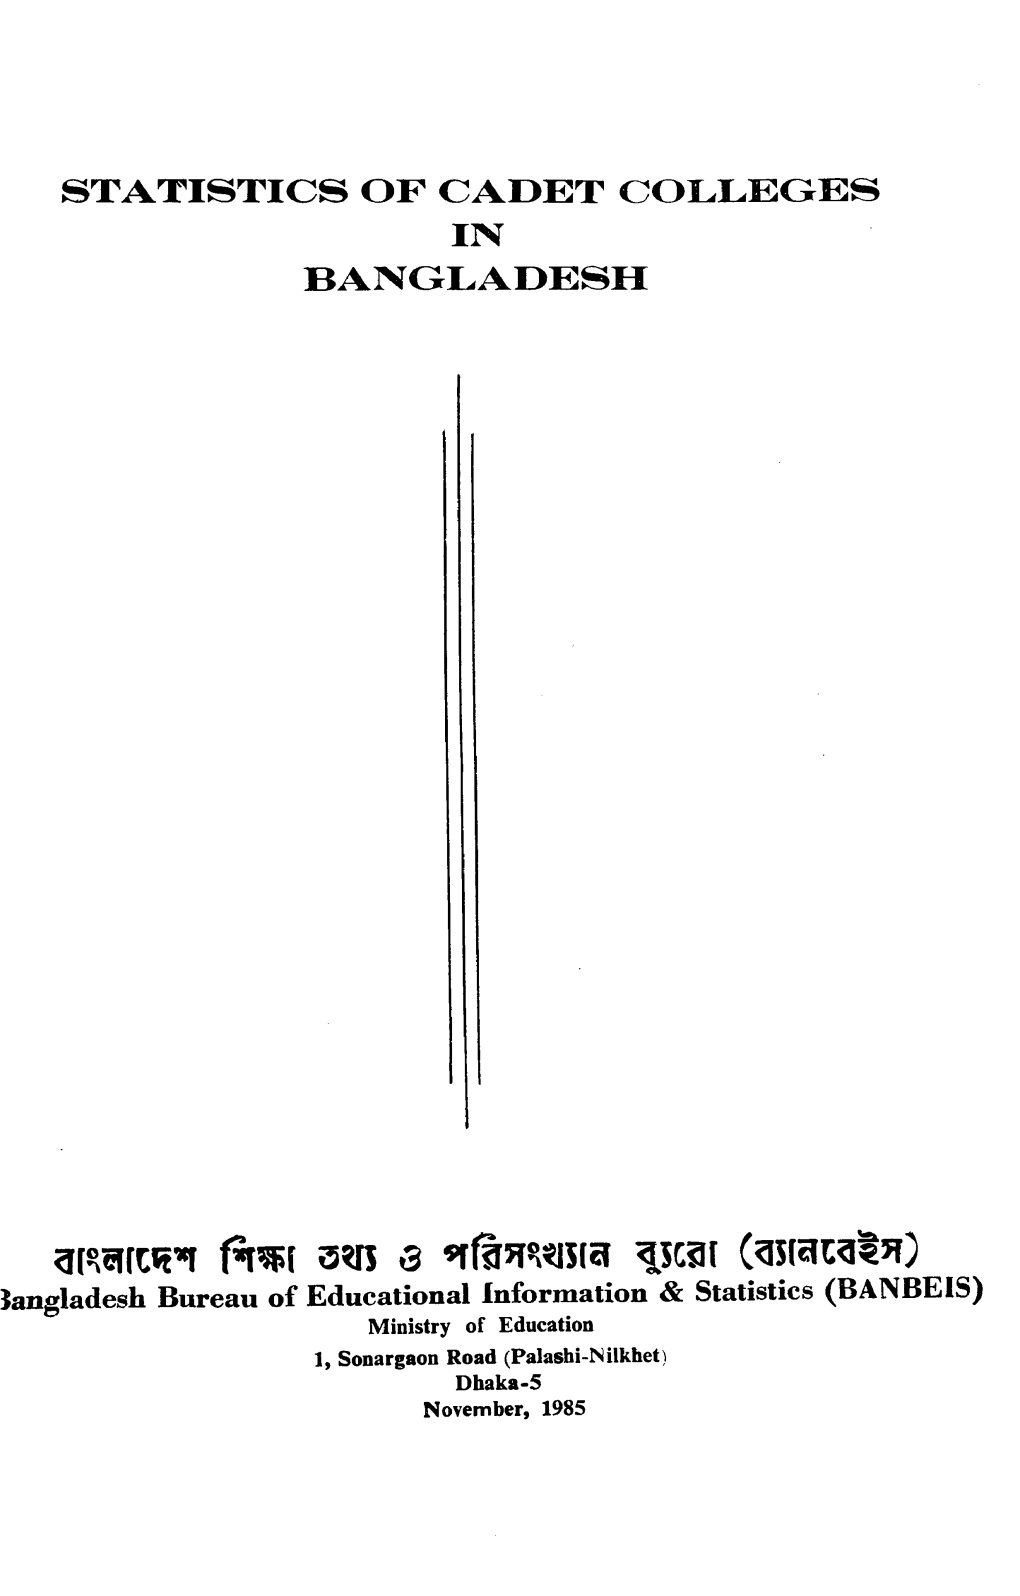 Pub.No.45 Statistics of Cadet Colleges in Bangladesh 1984